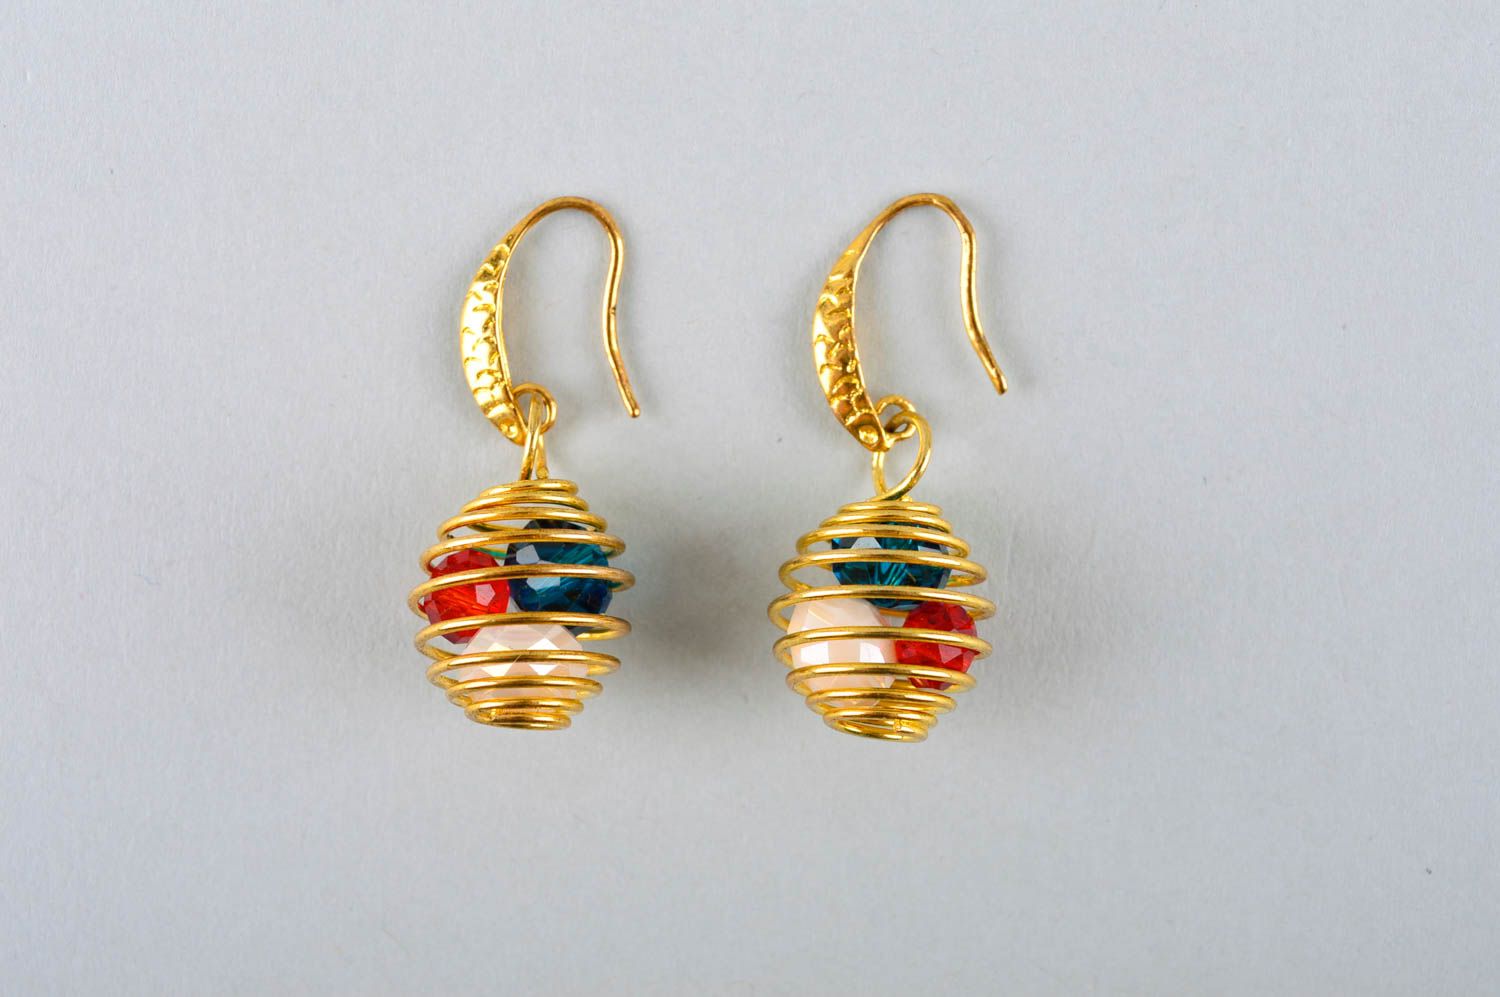 Cute earrings designer jewelry handmade earrings womens accessories gift ideas photo 2